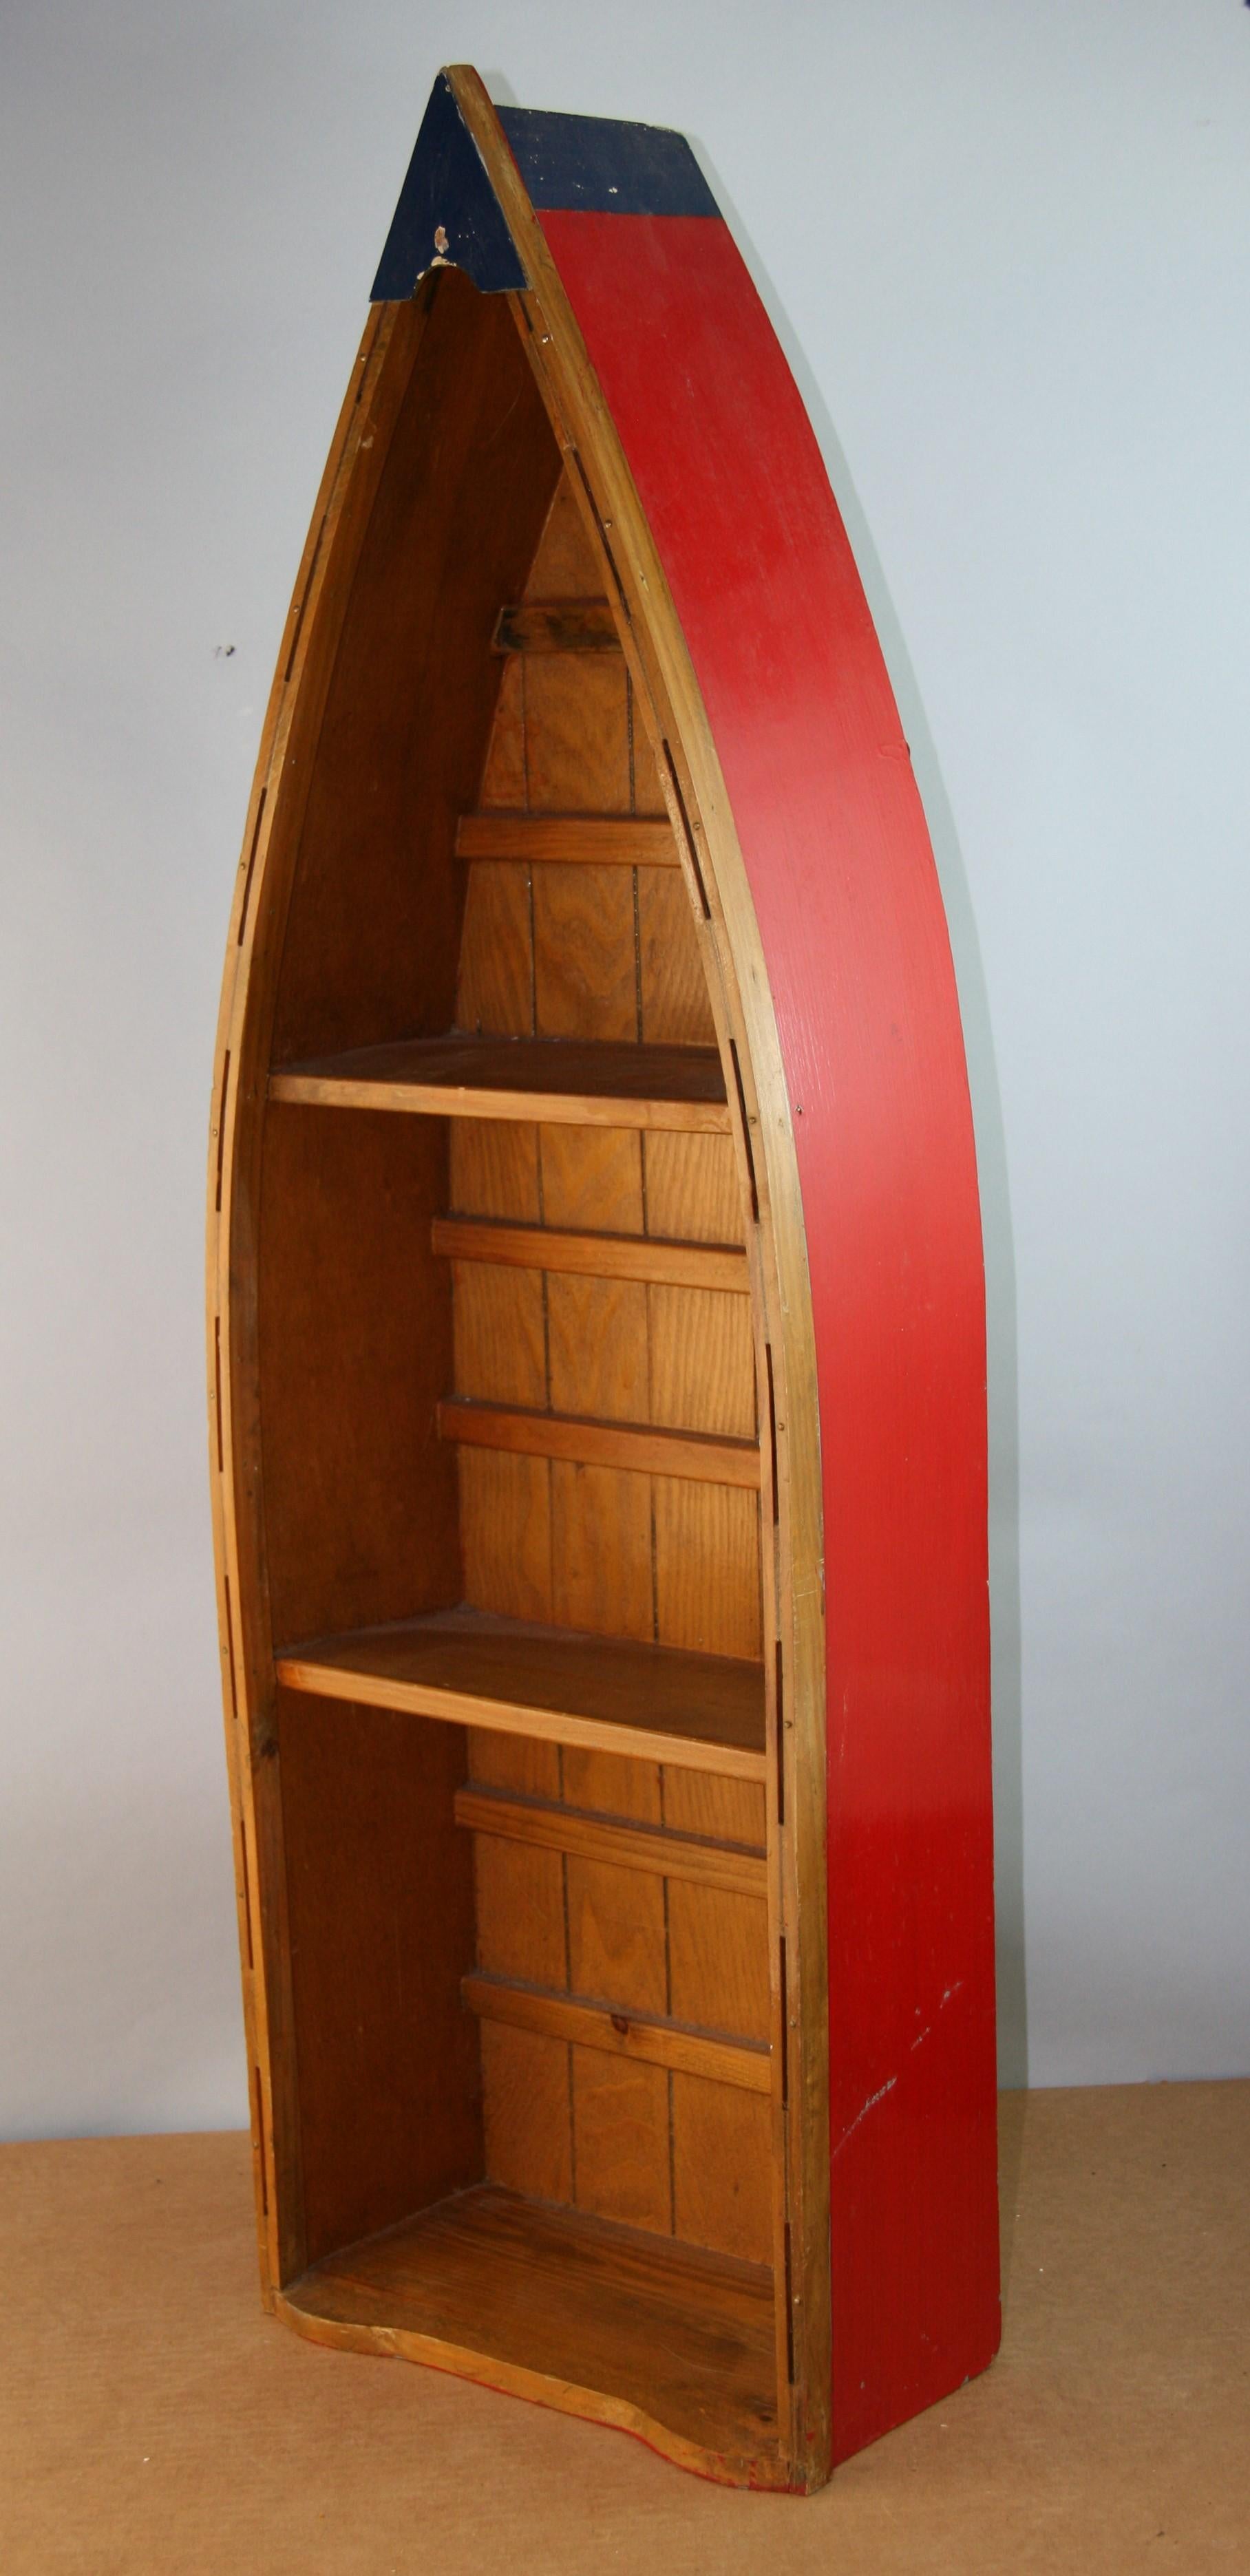 boat shaped shelves